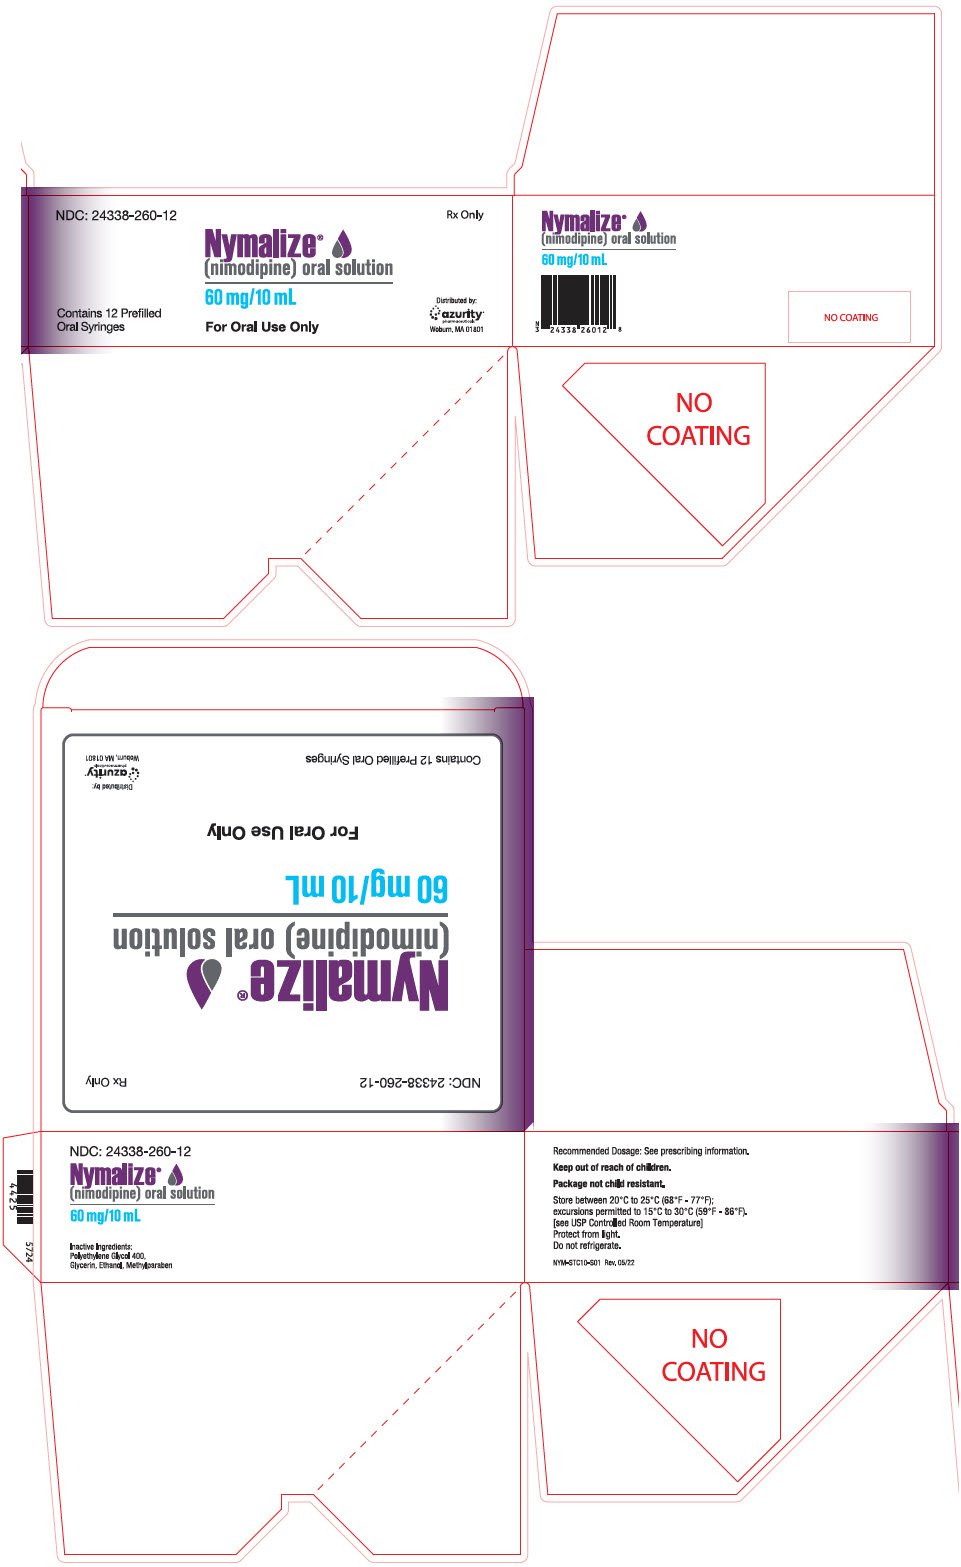 PRINCIPAL DISPLAY PANEL - 10 mL Syringe Package Carton